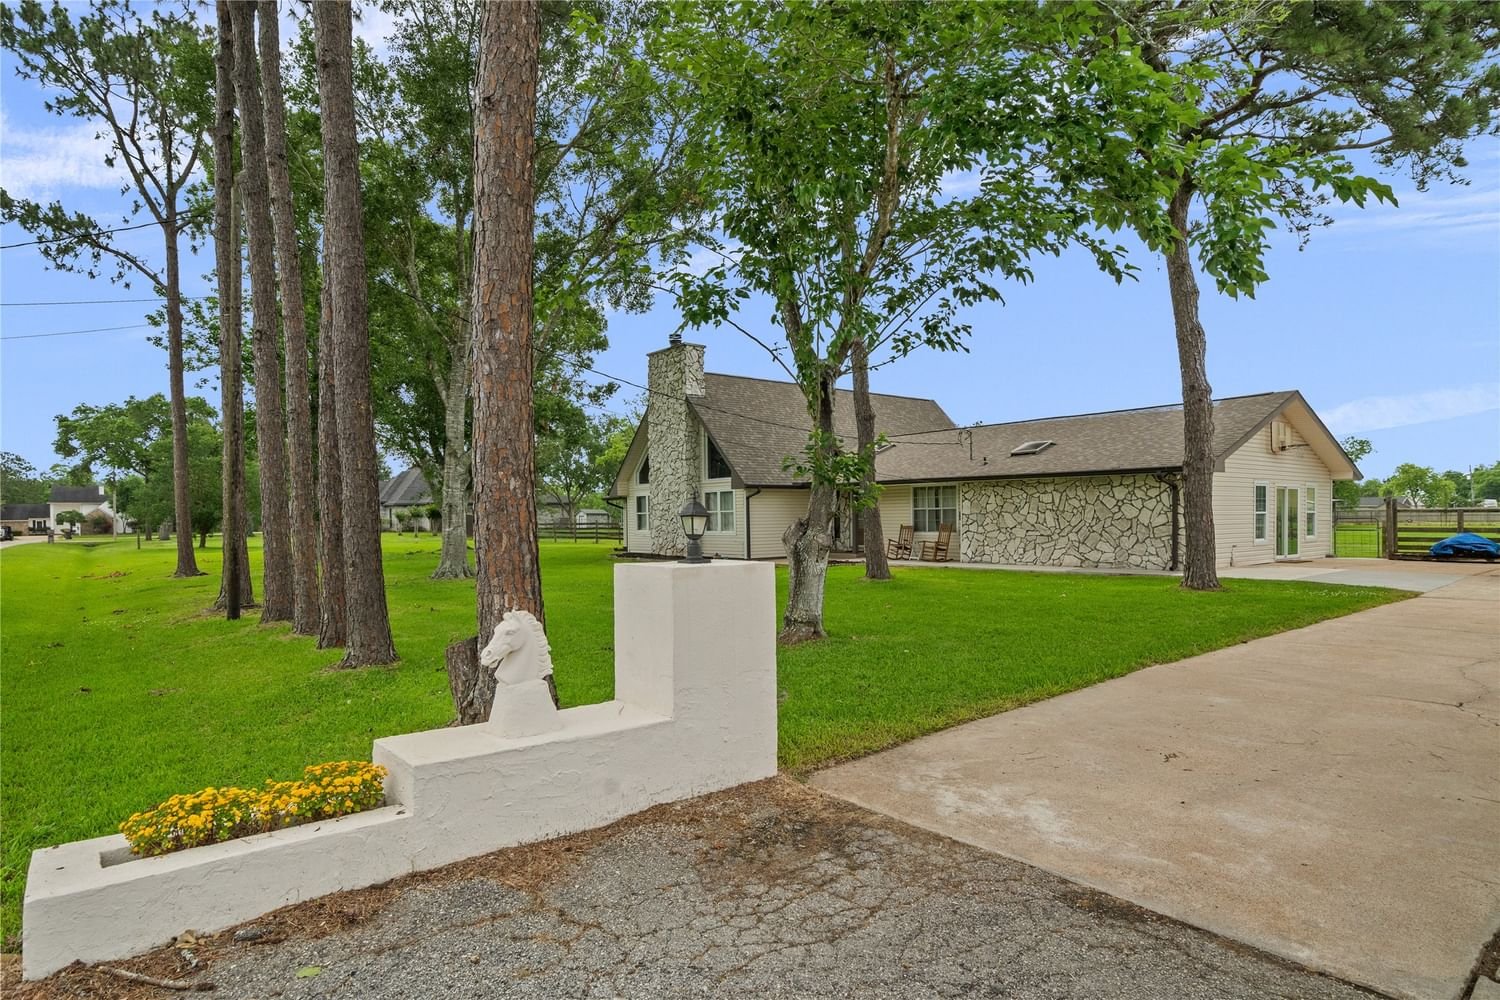 Real estate property located at 13507 Washington, Galveston, Tombrella Unrec Lts 329-338-3, Santa Fe, TX, US